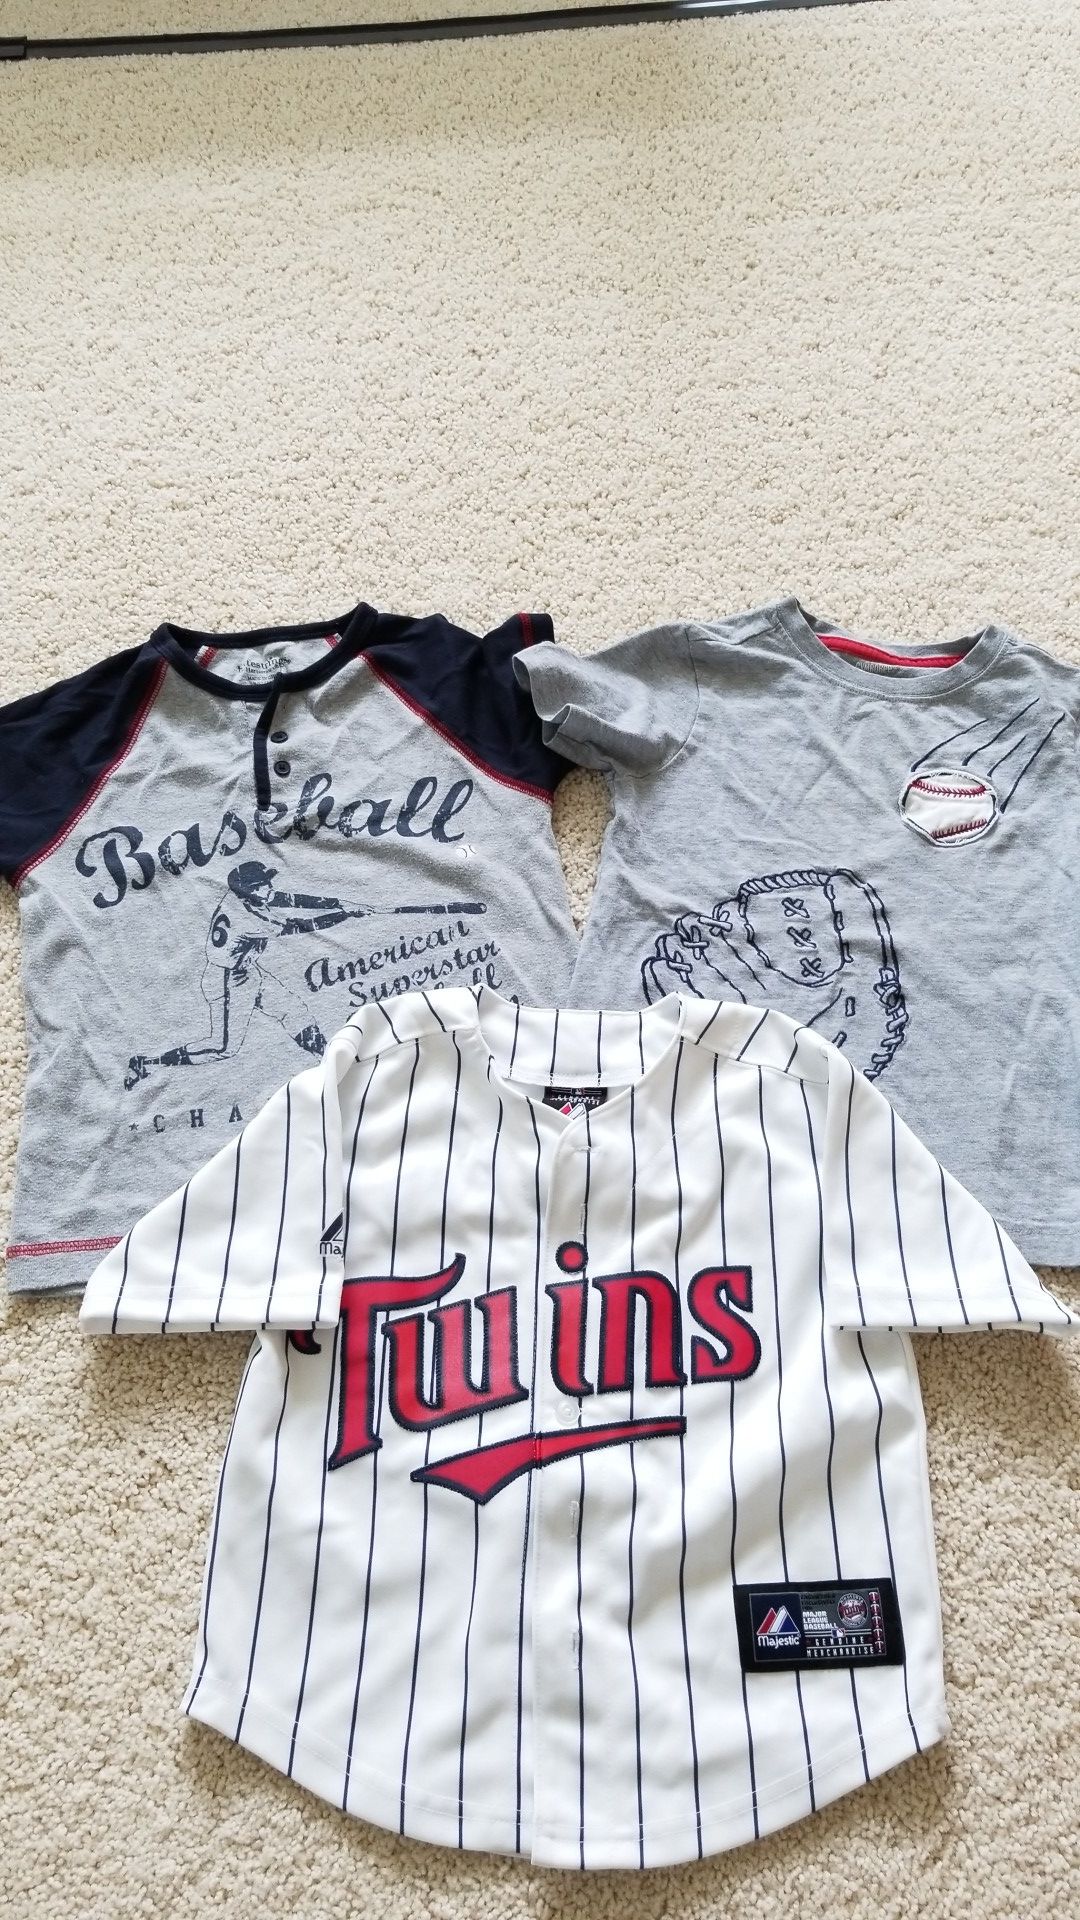 Boy 4T sport tshirts. 3 items.